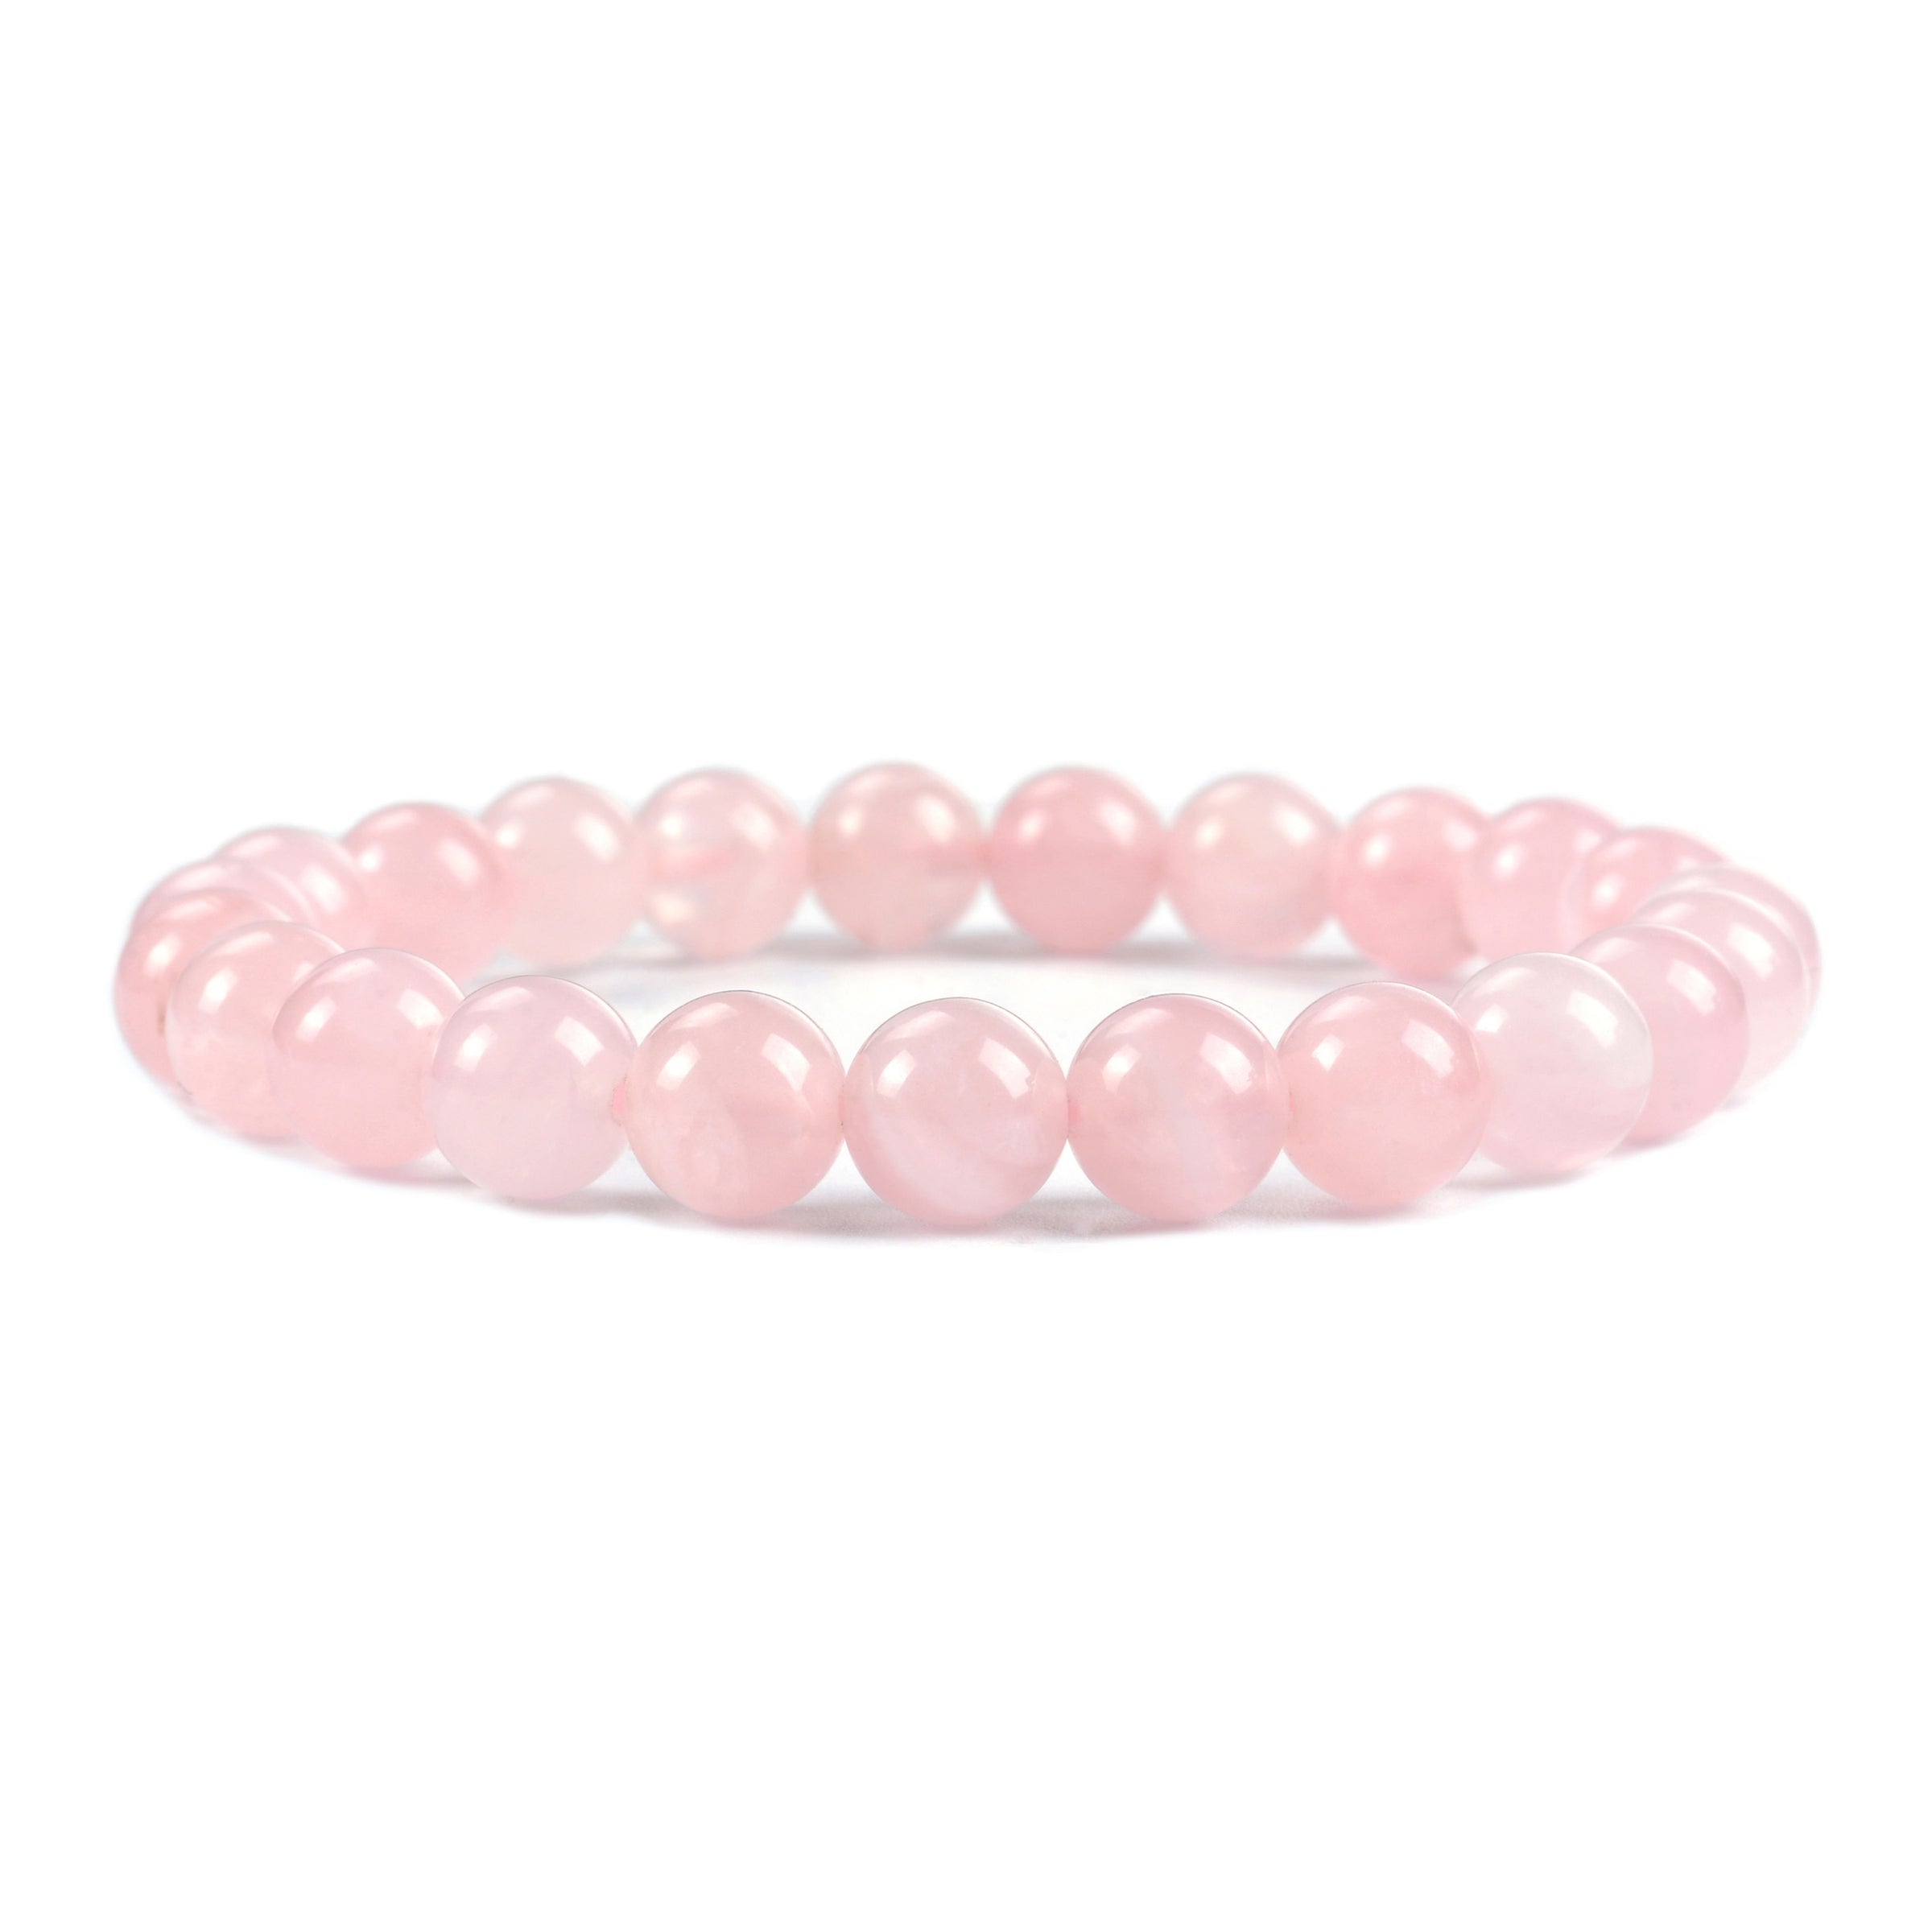 Pink Quartz Beaded Bracelet